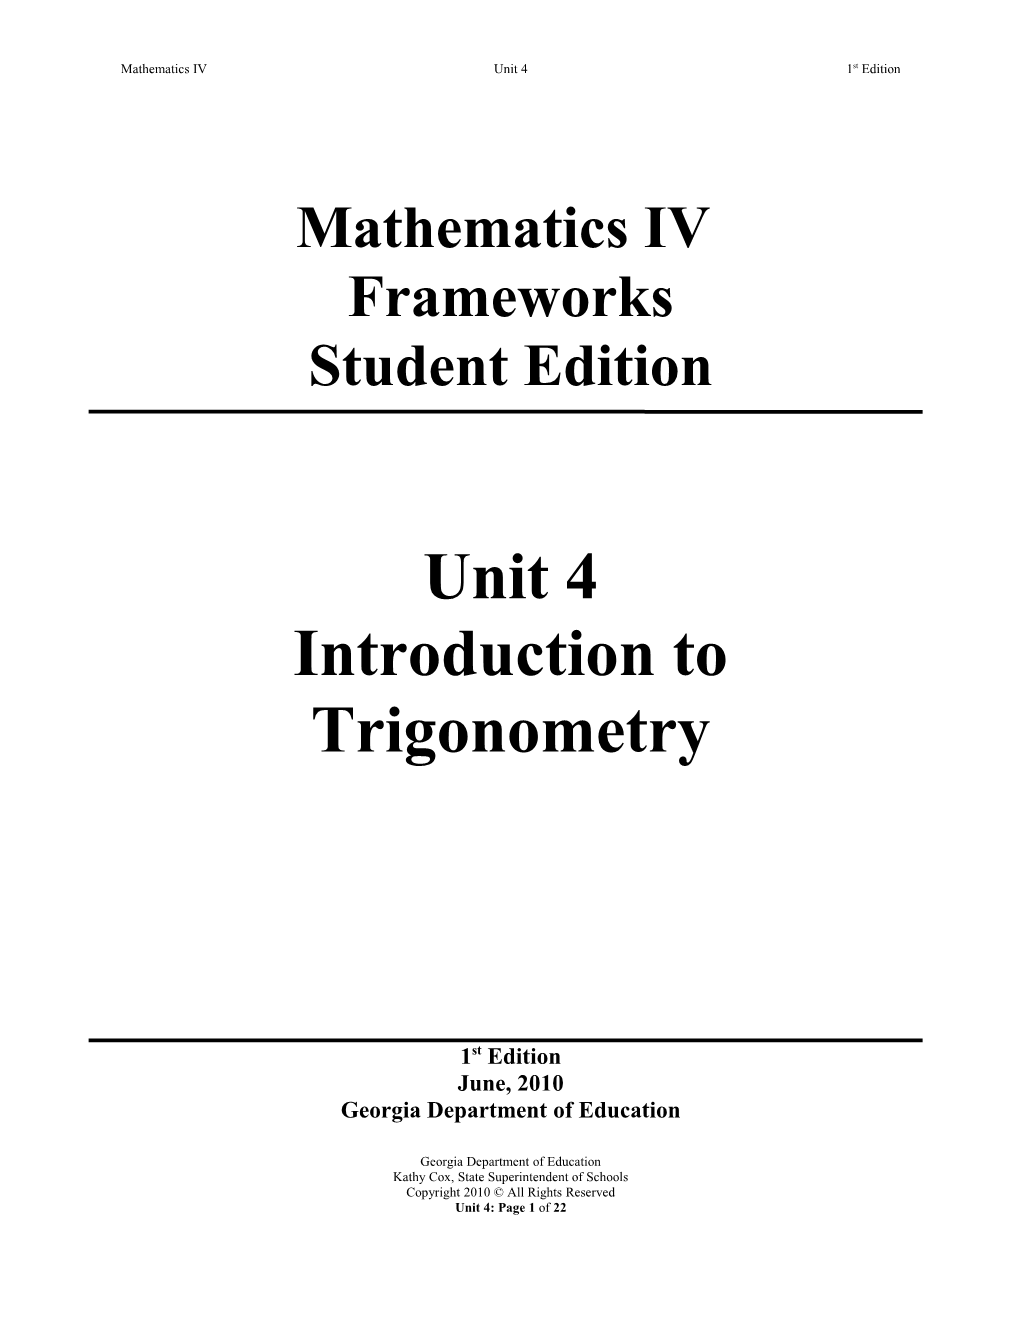 Mathematics IV Frameworks